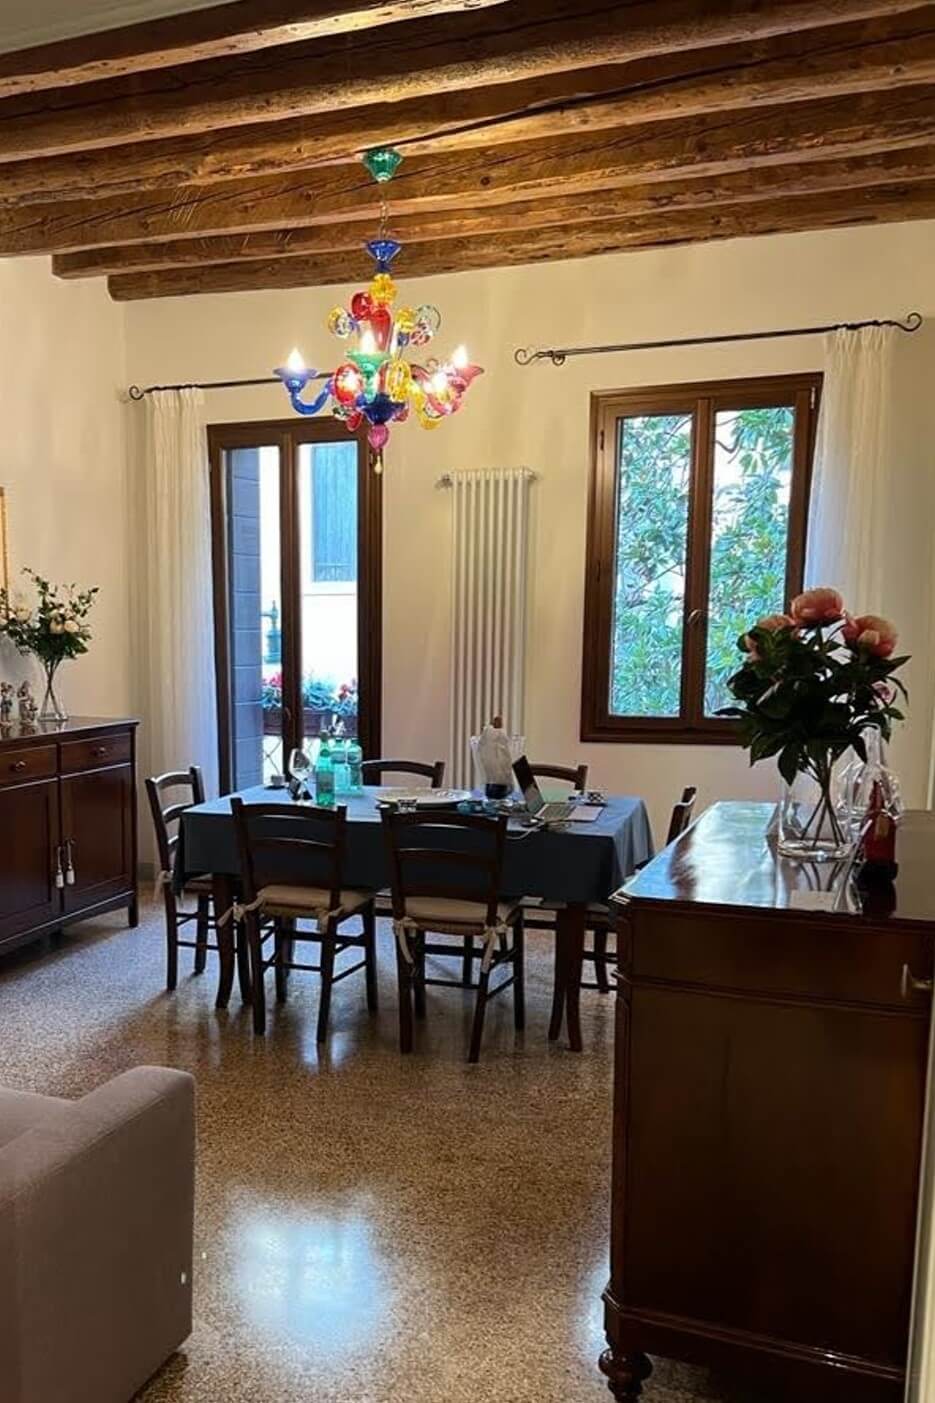 The interior of Adrian Leeds' apartment in Venice, Italy